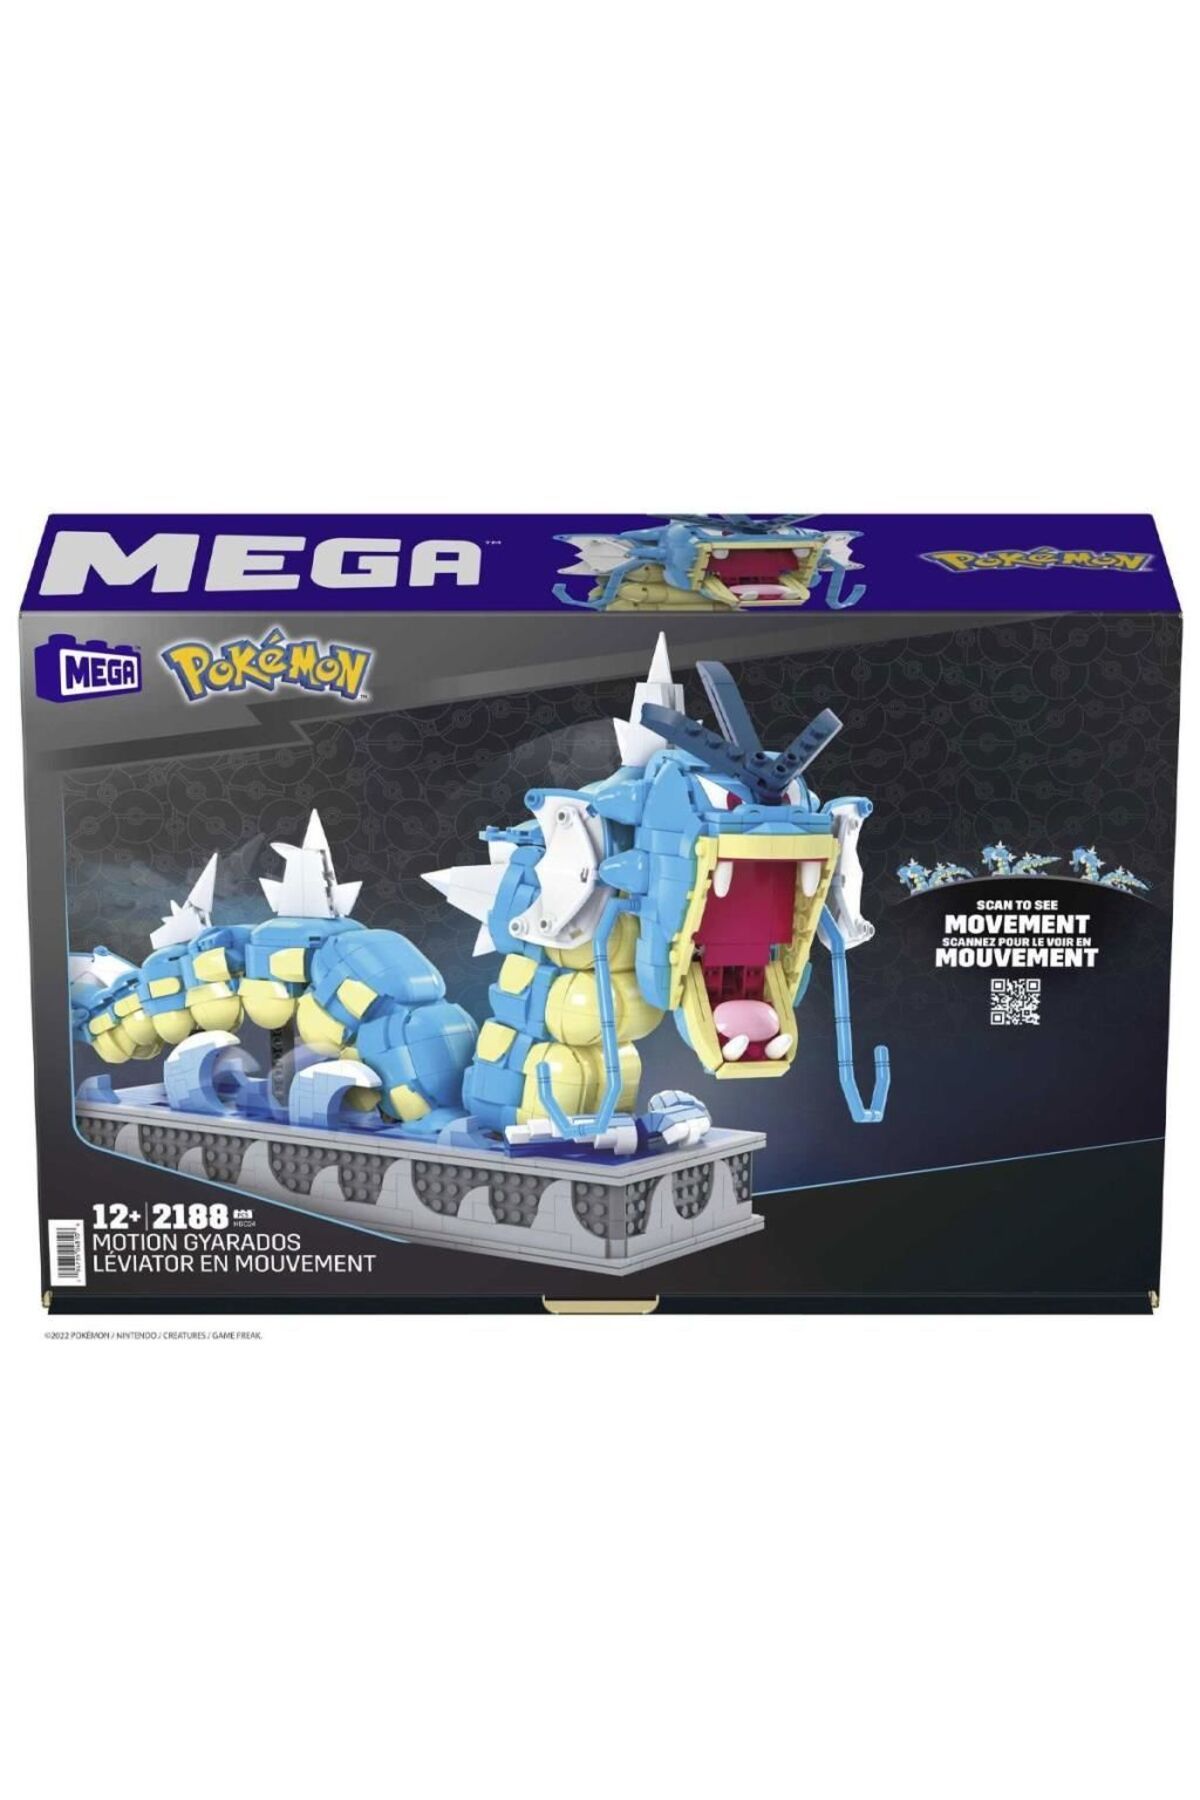 Mattel Byronl Hgc24 Mega™ Pokémon™ Kinetik Gyarados 2188 Parça +12 Yaş Byrnew